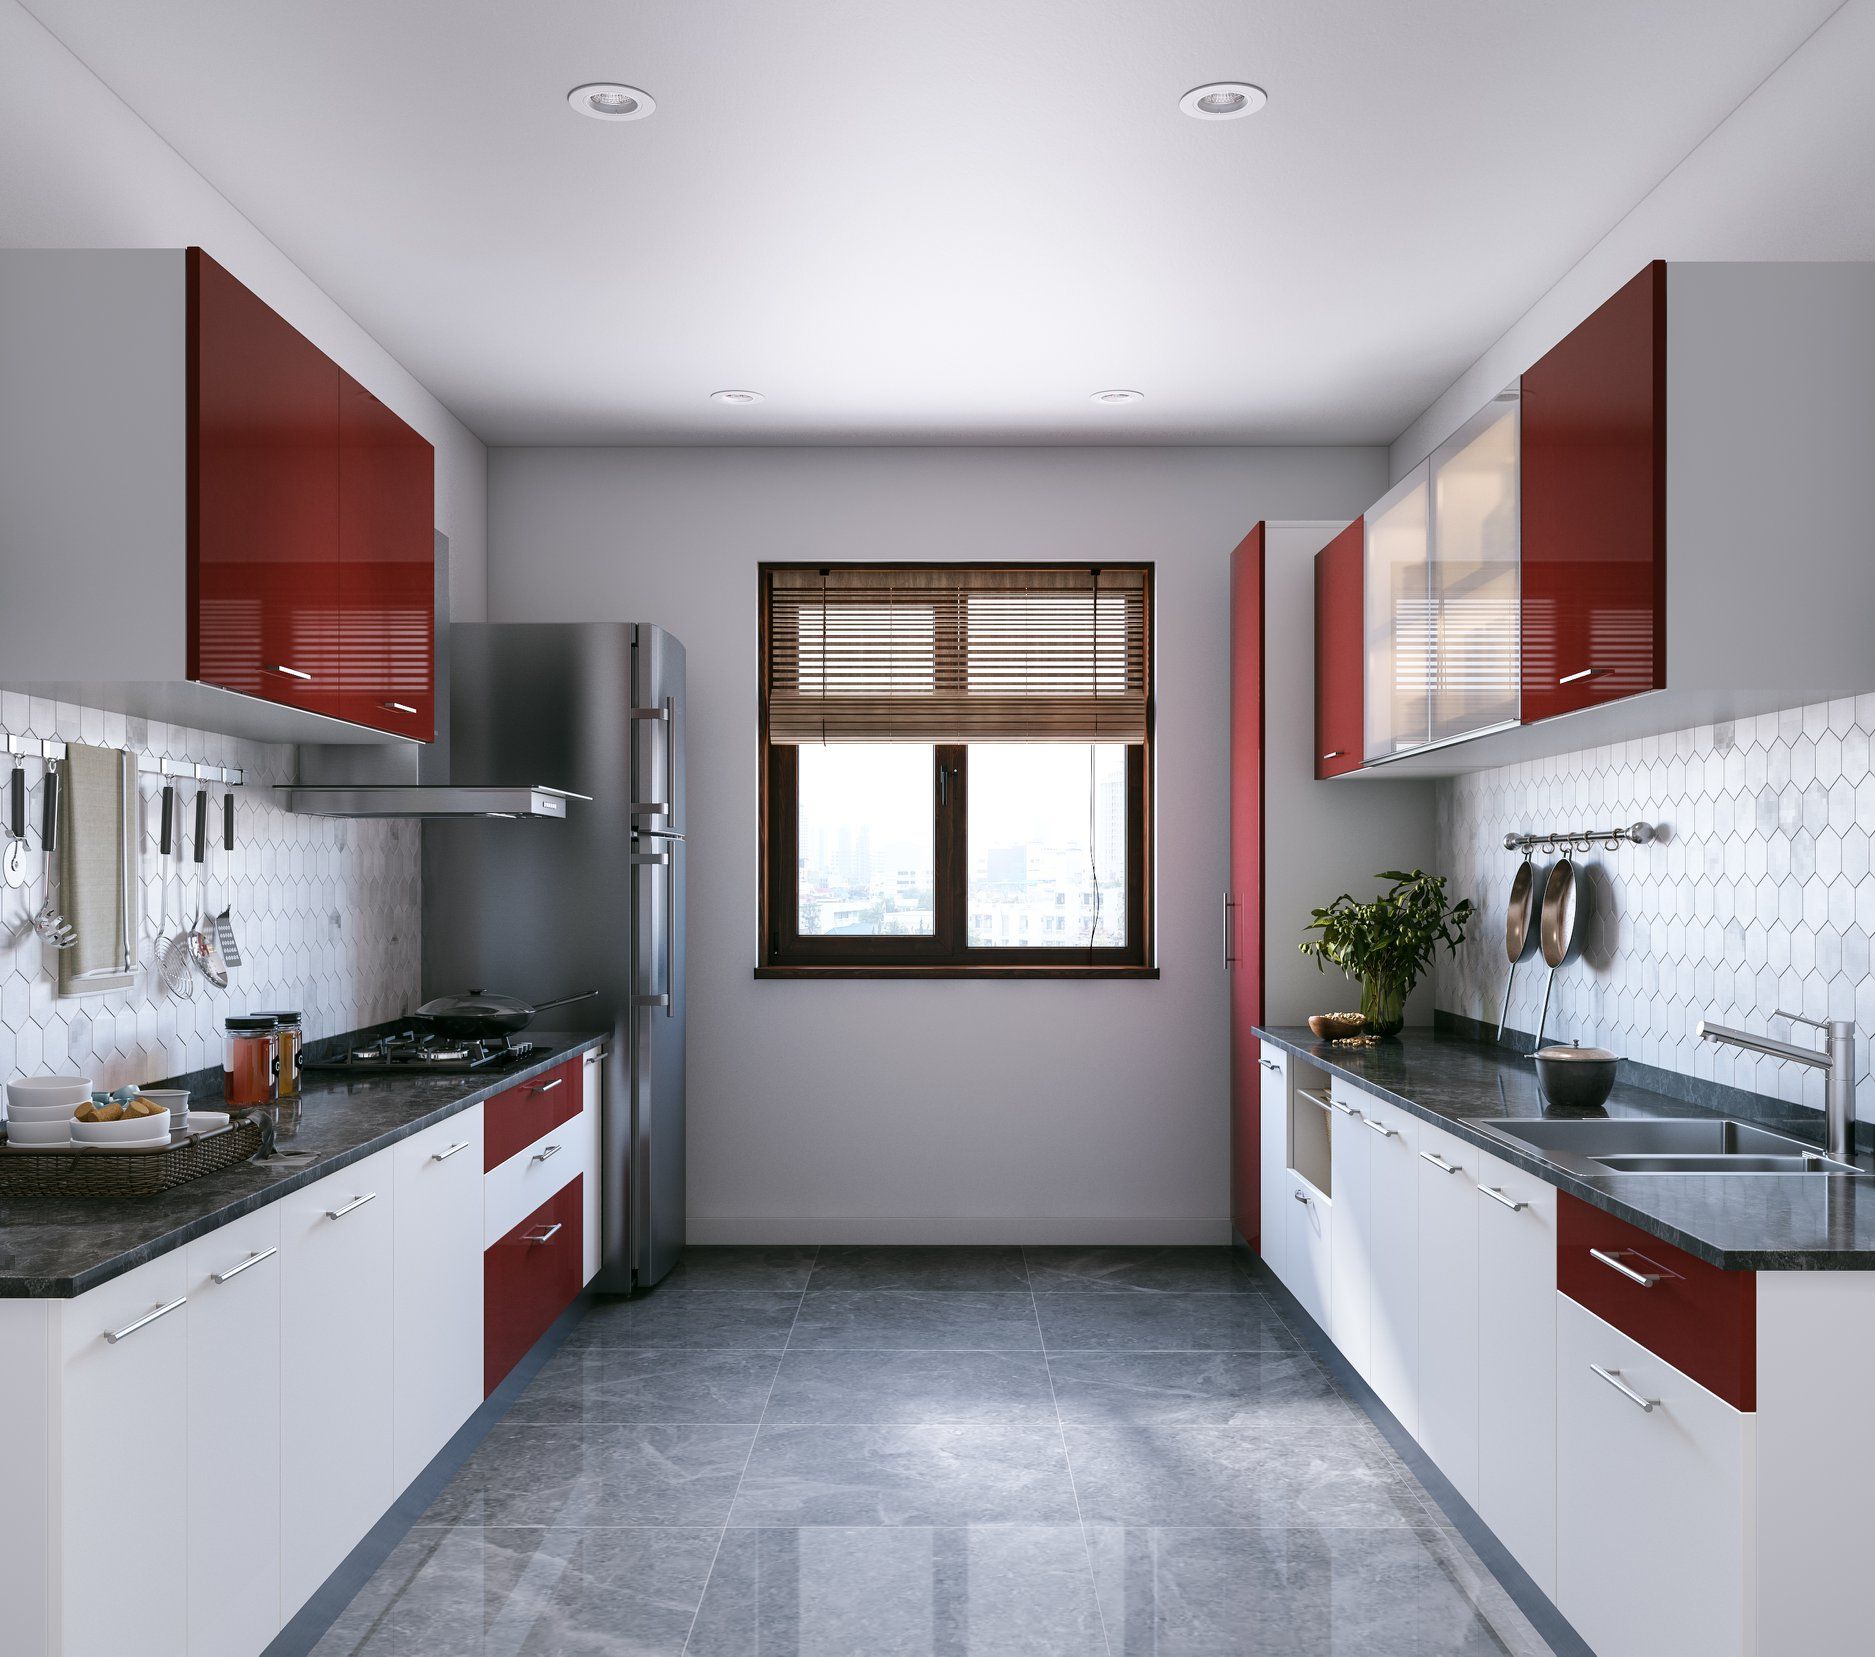 https://jumanji.livspace-cdn.com/magazine/wp-content/uploads/sites/3/2020/03/11082818/Glossy-laminates-compact-kitchen.jpg